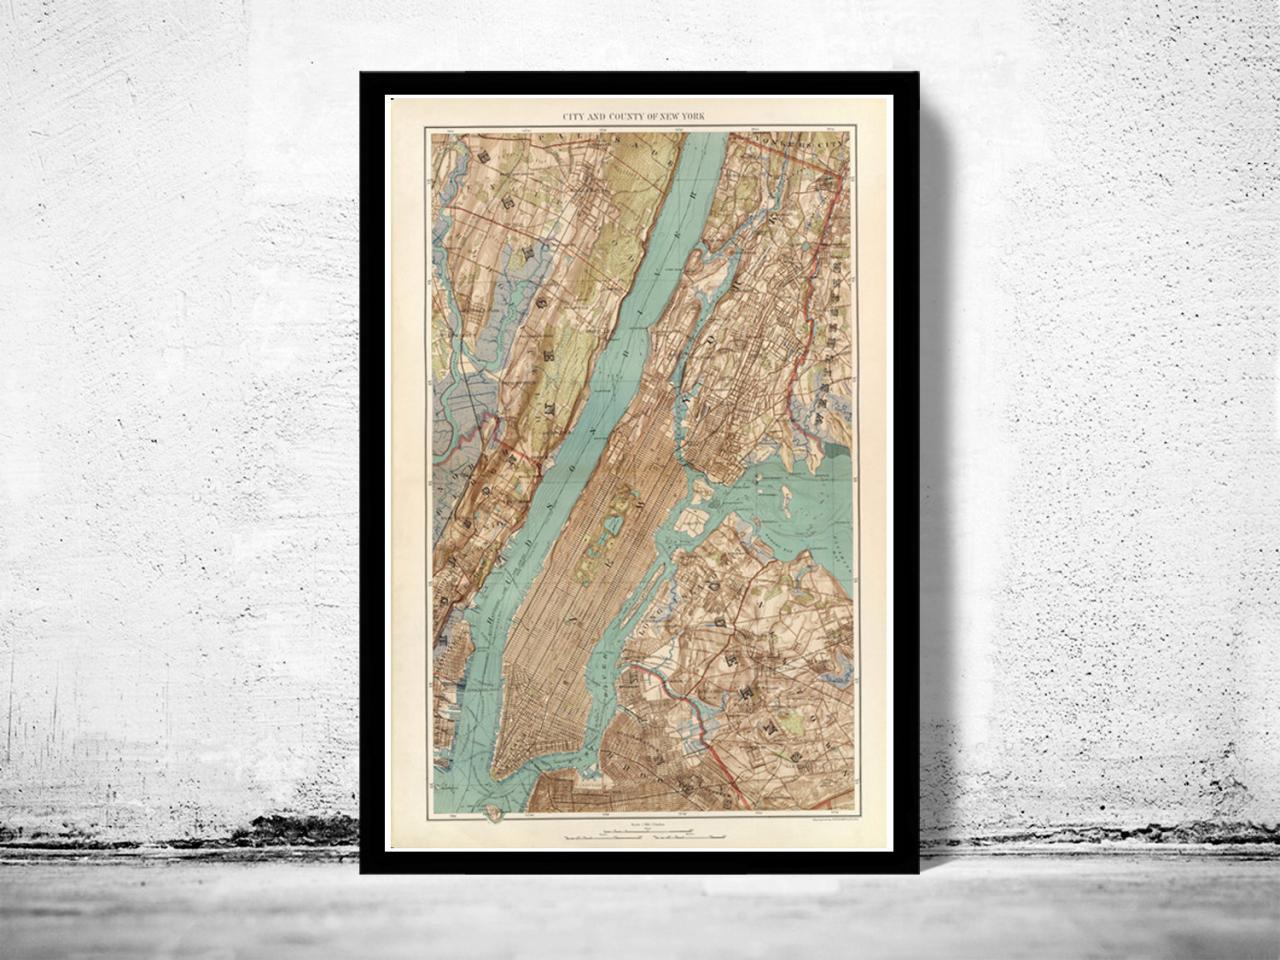 Old Map of New York and Manhattan, Bronx, Brooklyn 1891